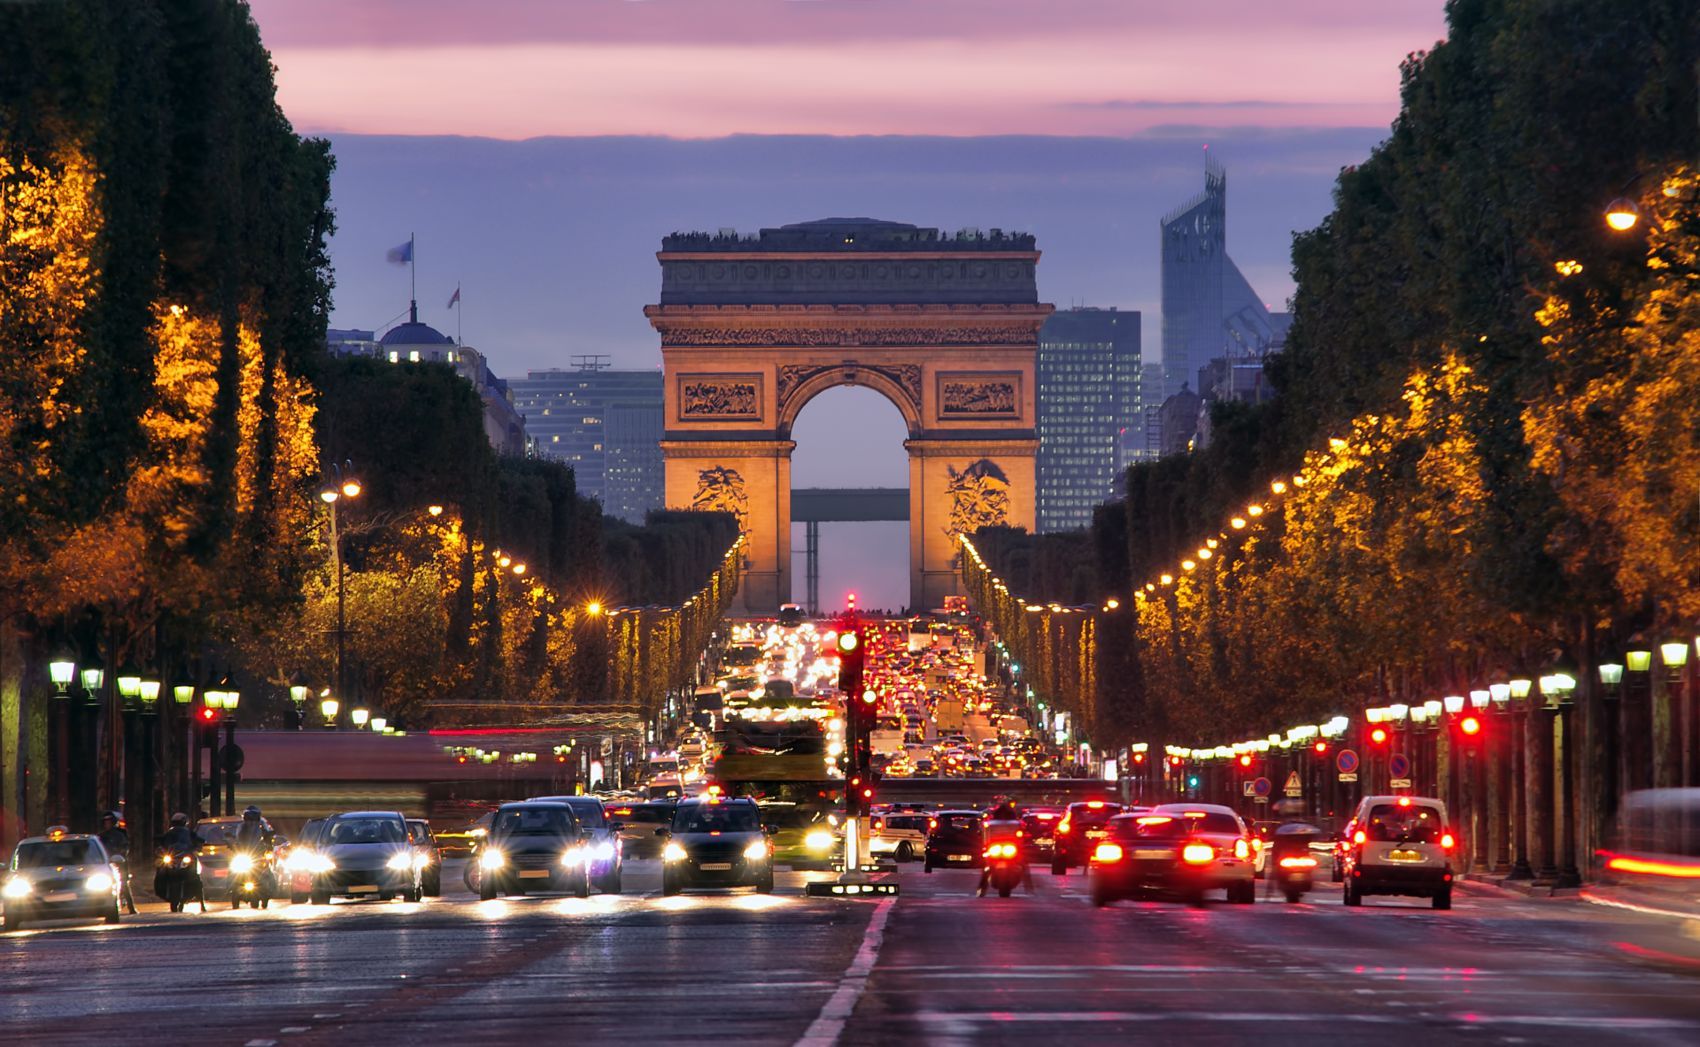 Paris, Champs-Elysees at night - France quarantine